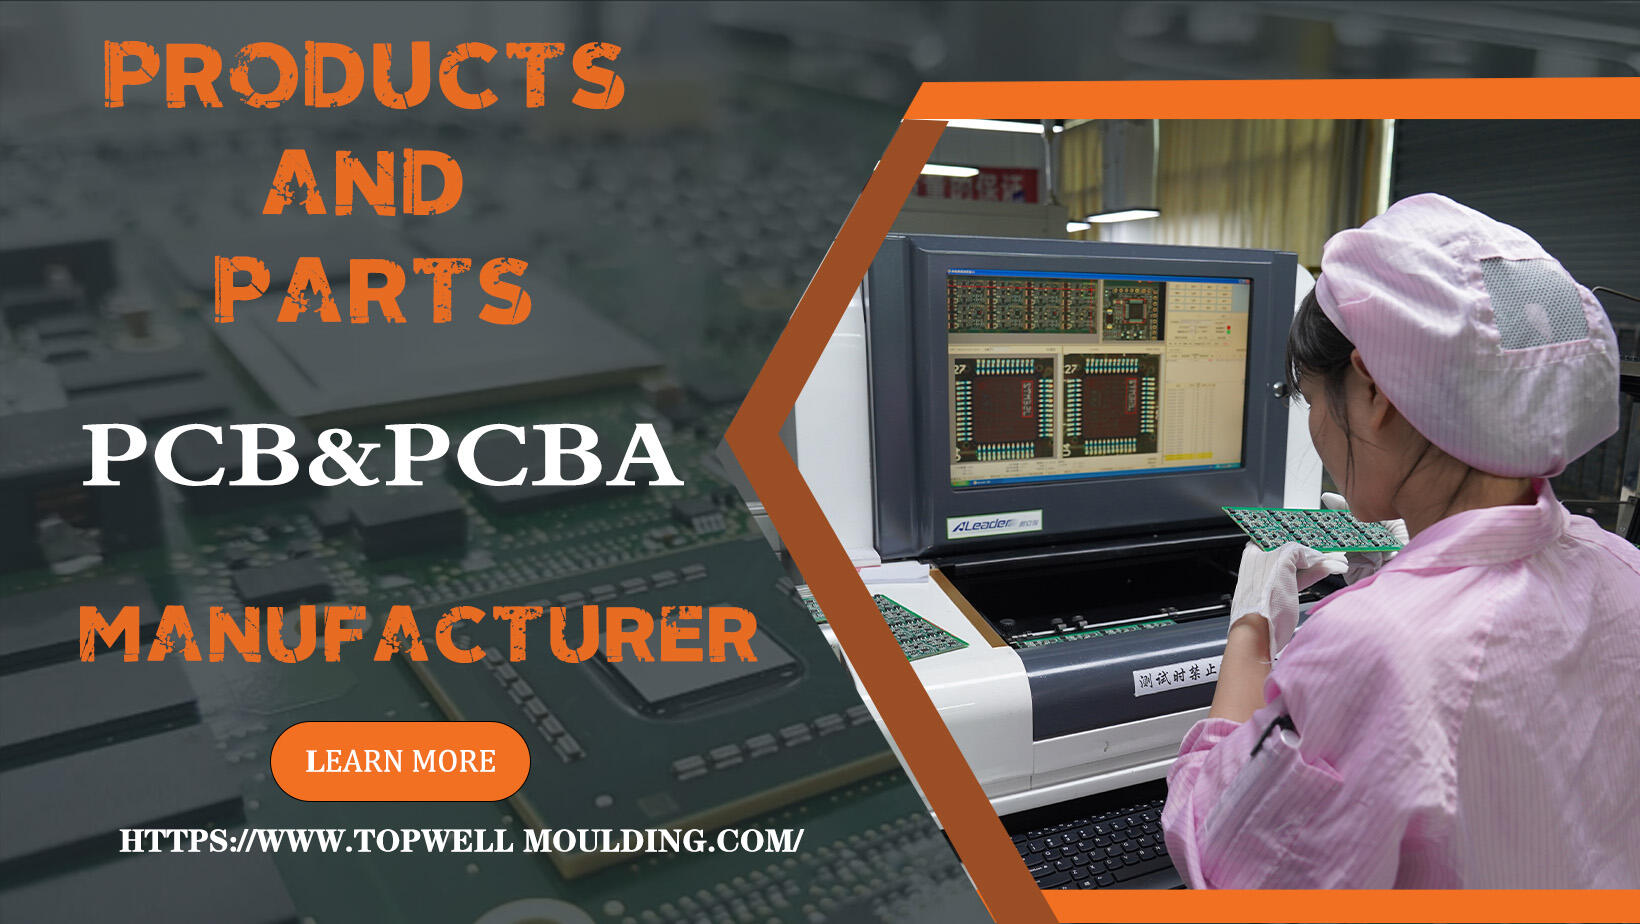 PCBA;PCB;PCB (printed circuit board) design, PCBA (PCB assembly) and OEM